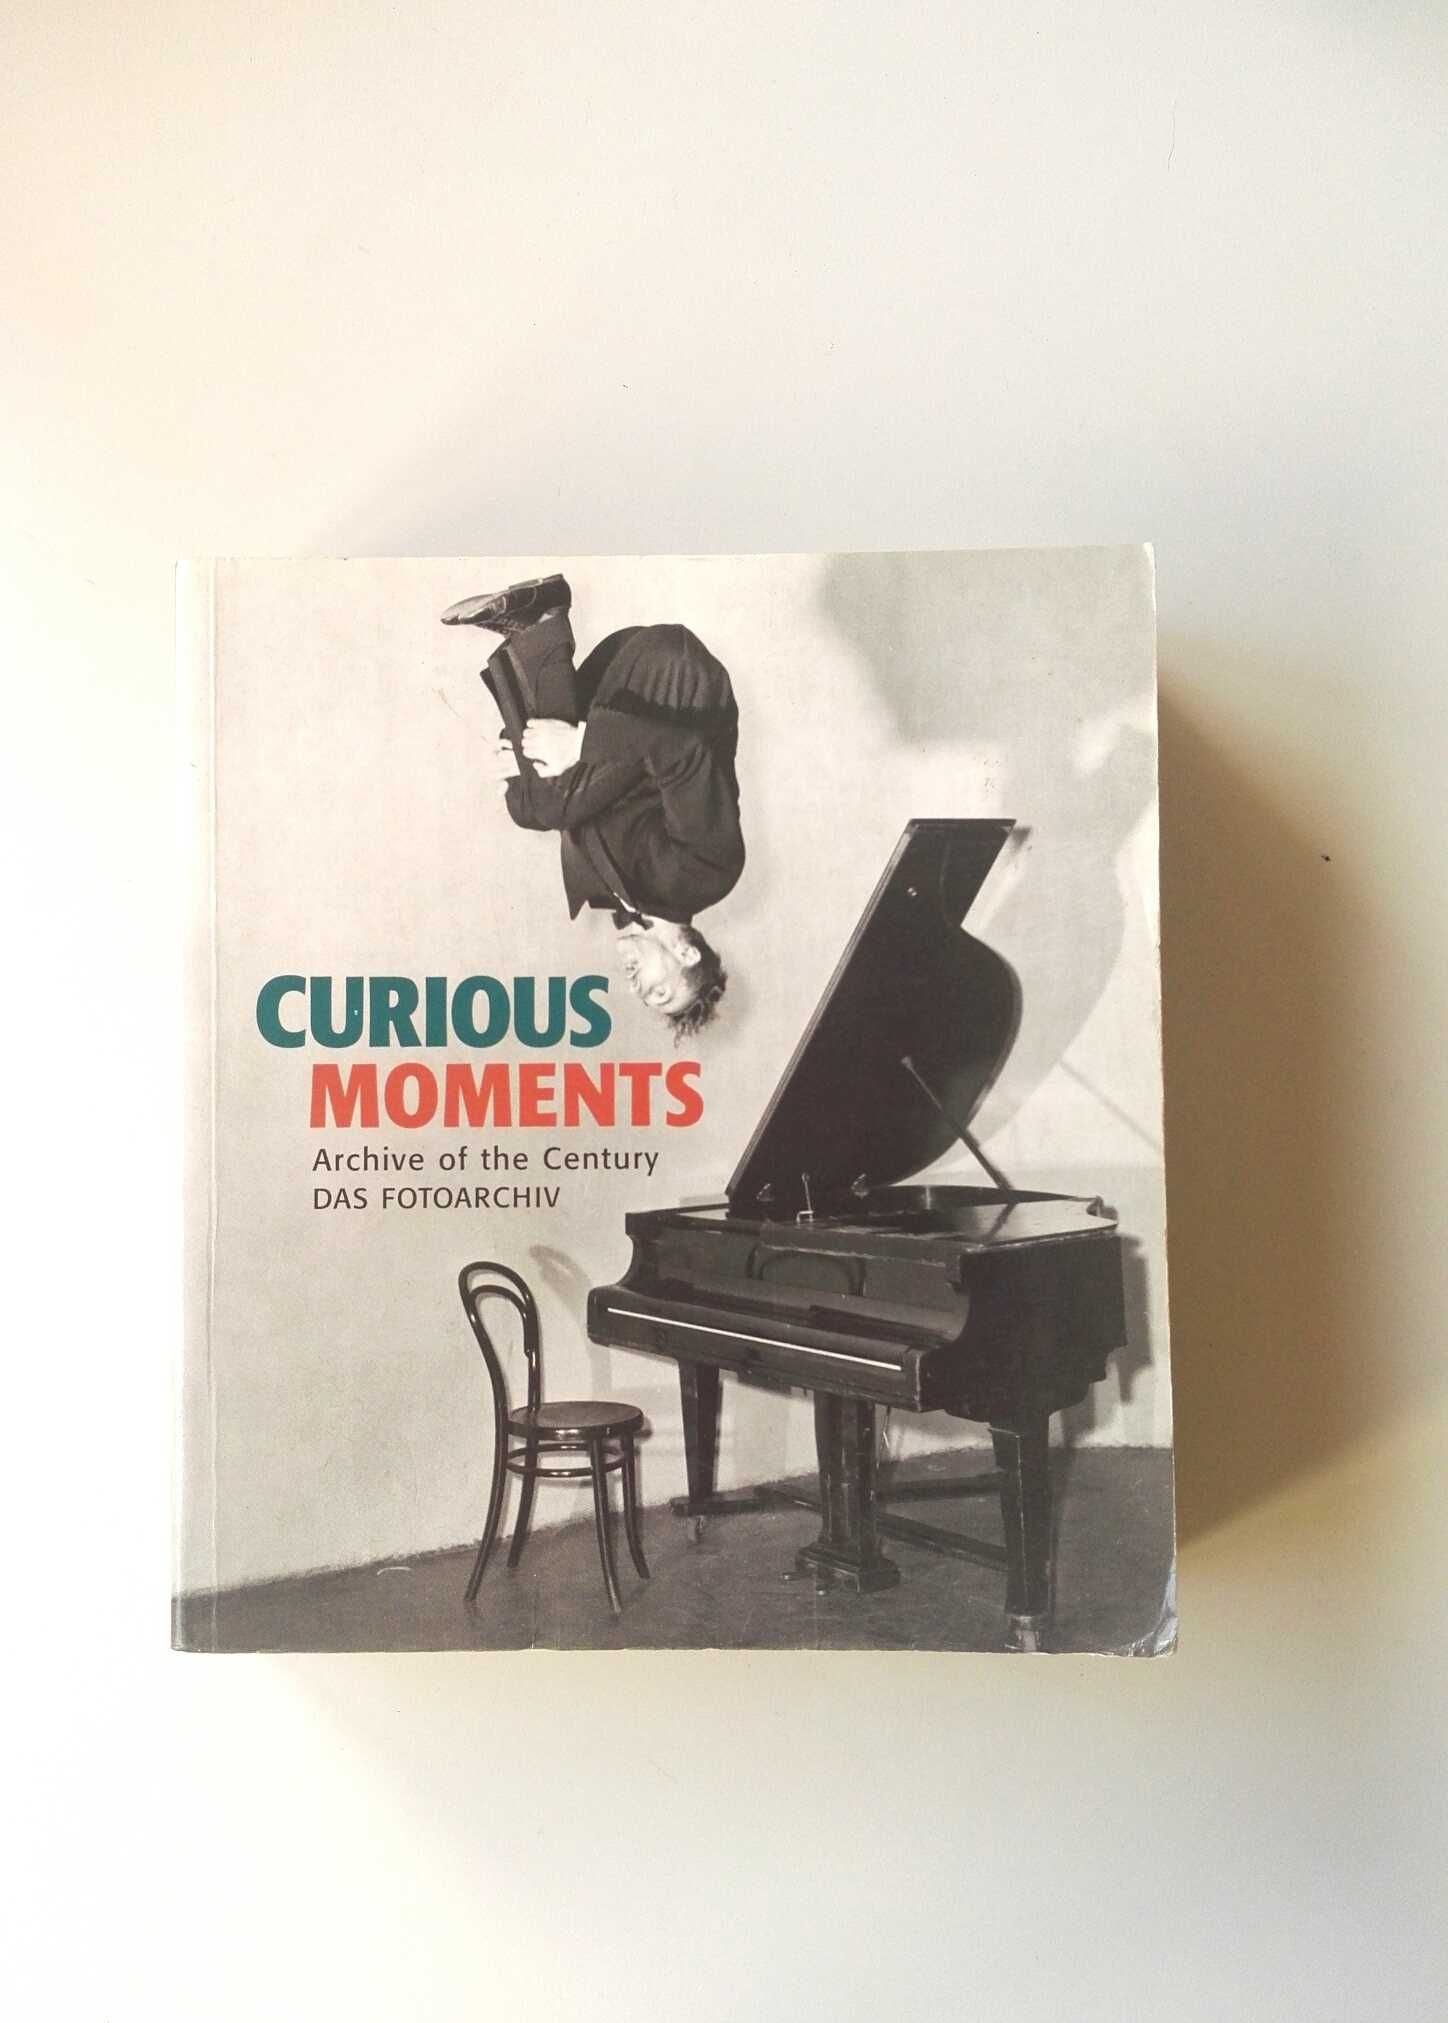 Livro fotografia "Curious Moments" de Hendrik Neubauer